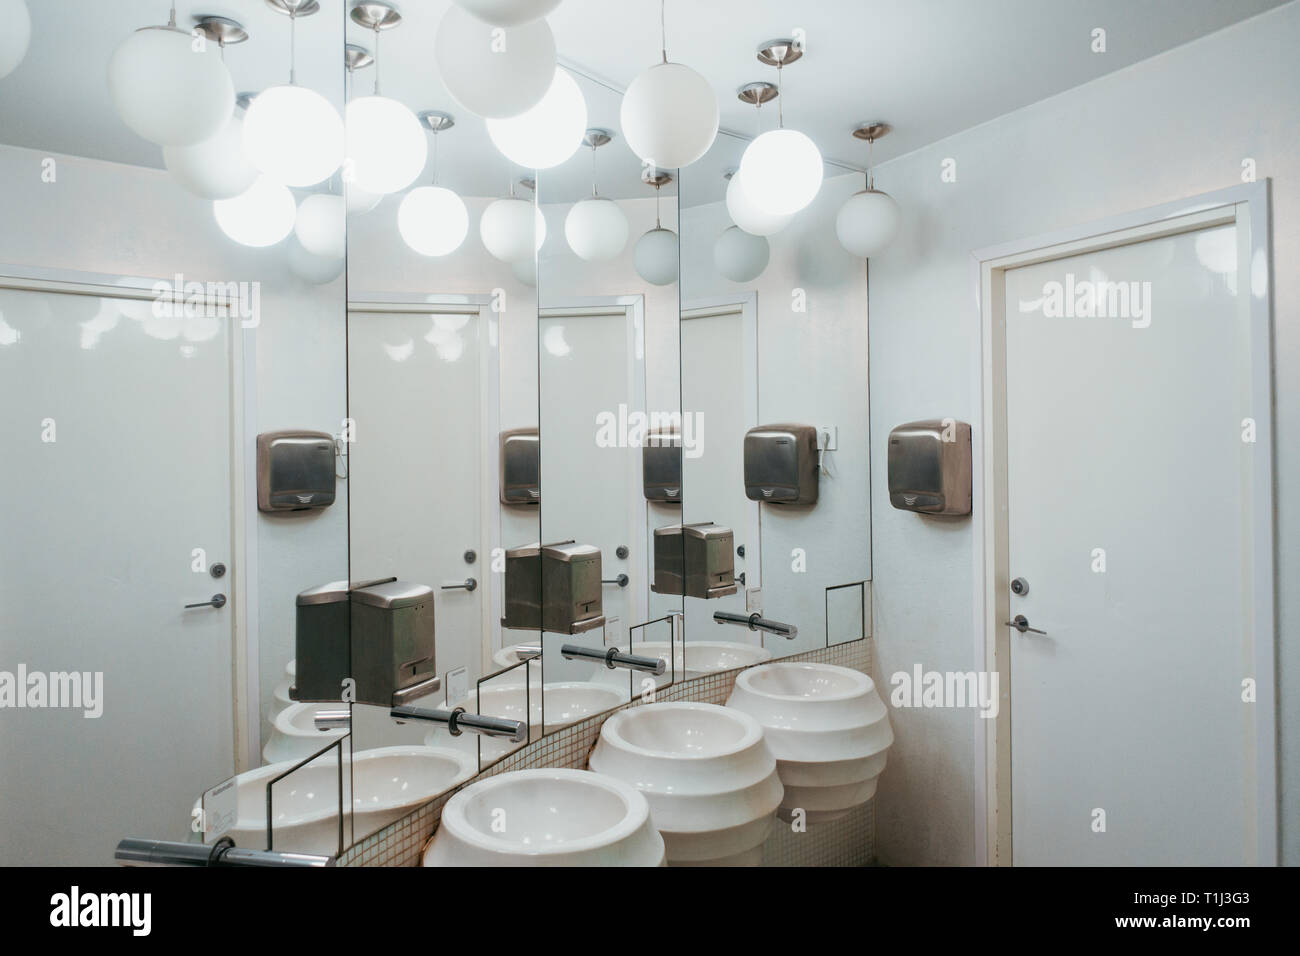 A peculiar retro-styled public bathroom seen in Tallinn, Estonia Stock Photo